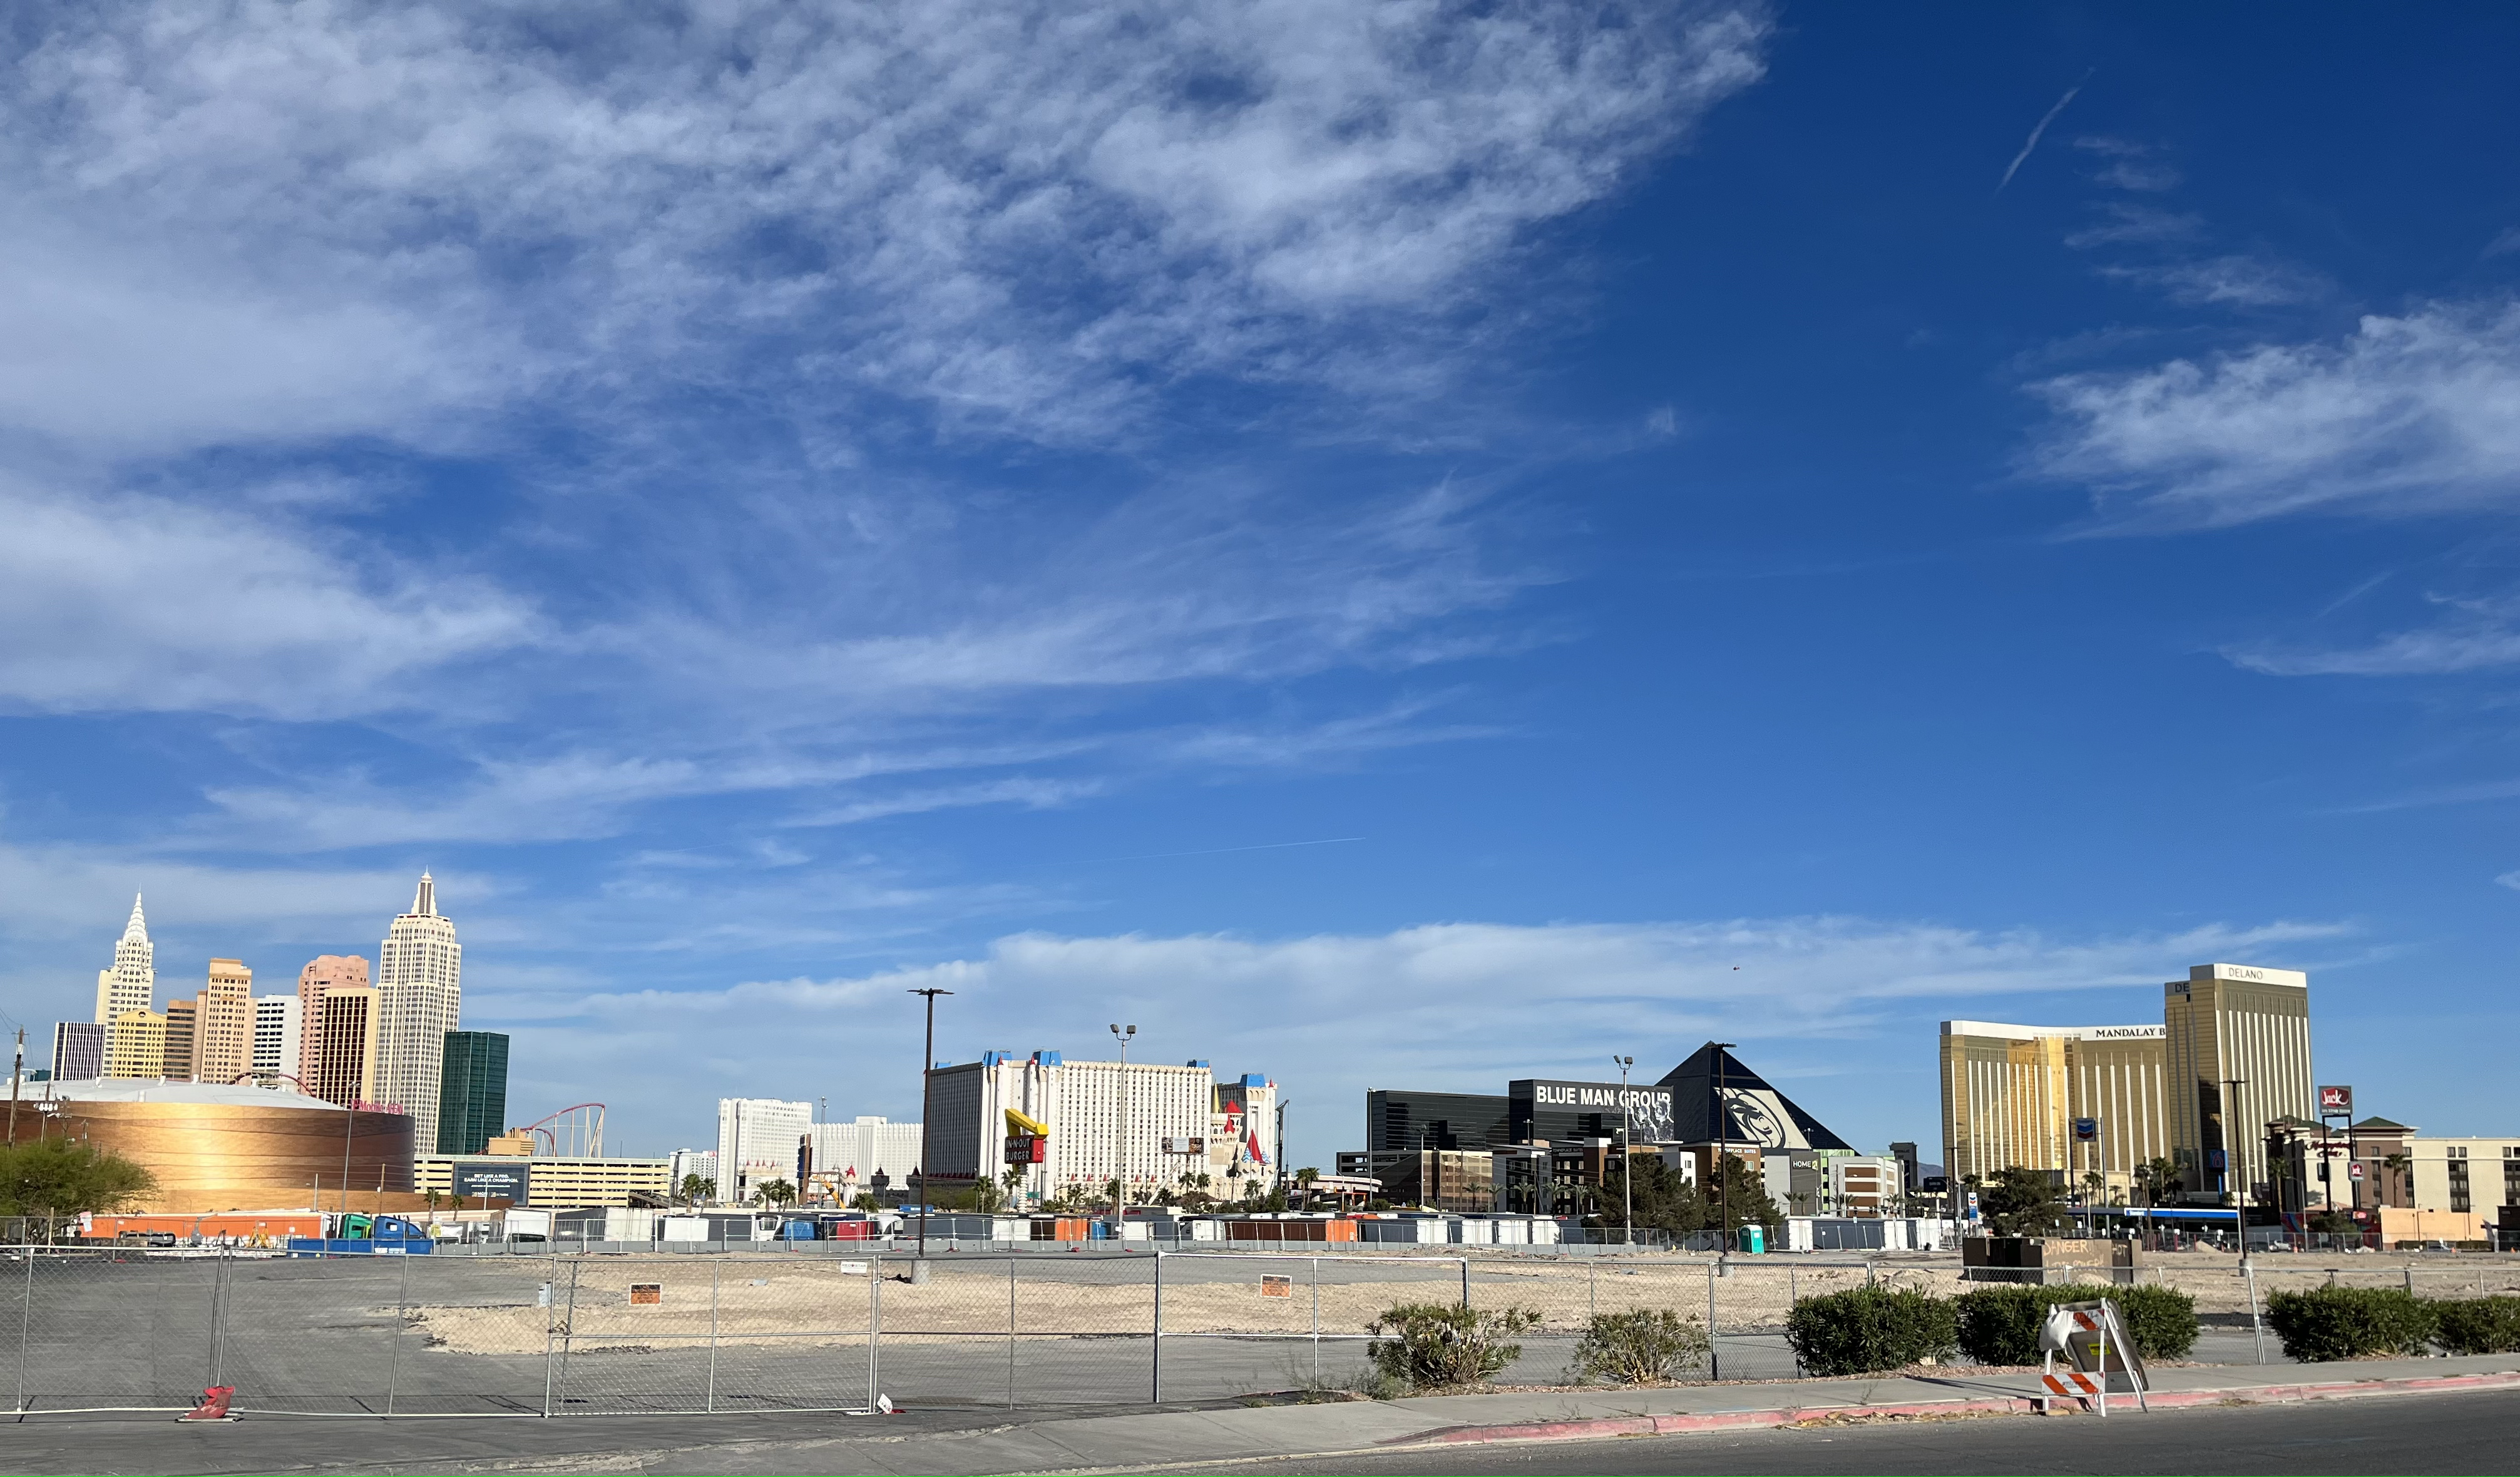 Las Vegas A's *NEW* Potential Stadium Renderings Released 